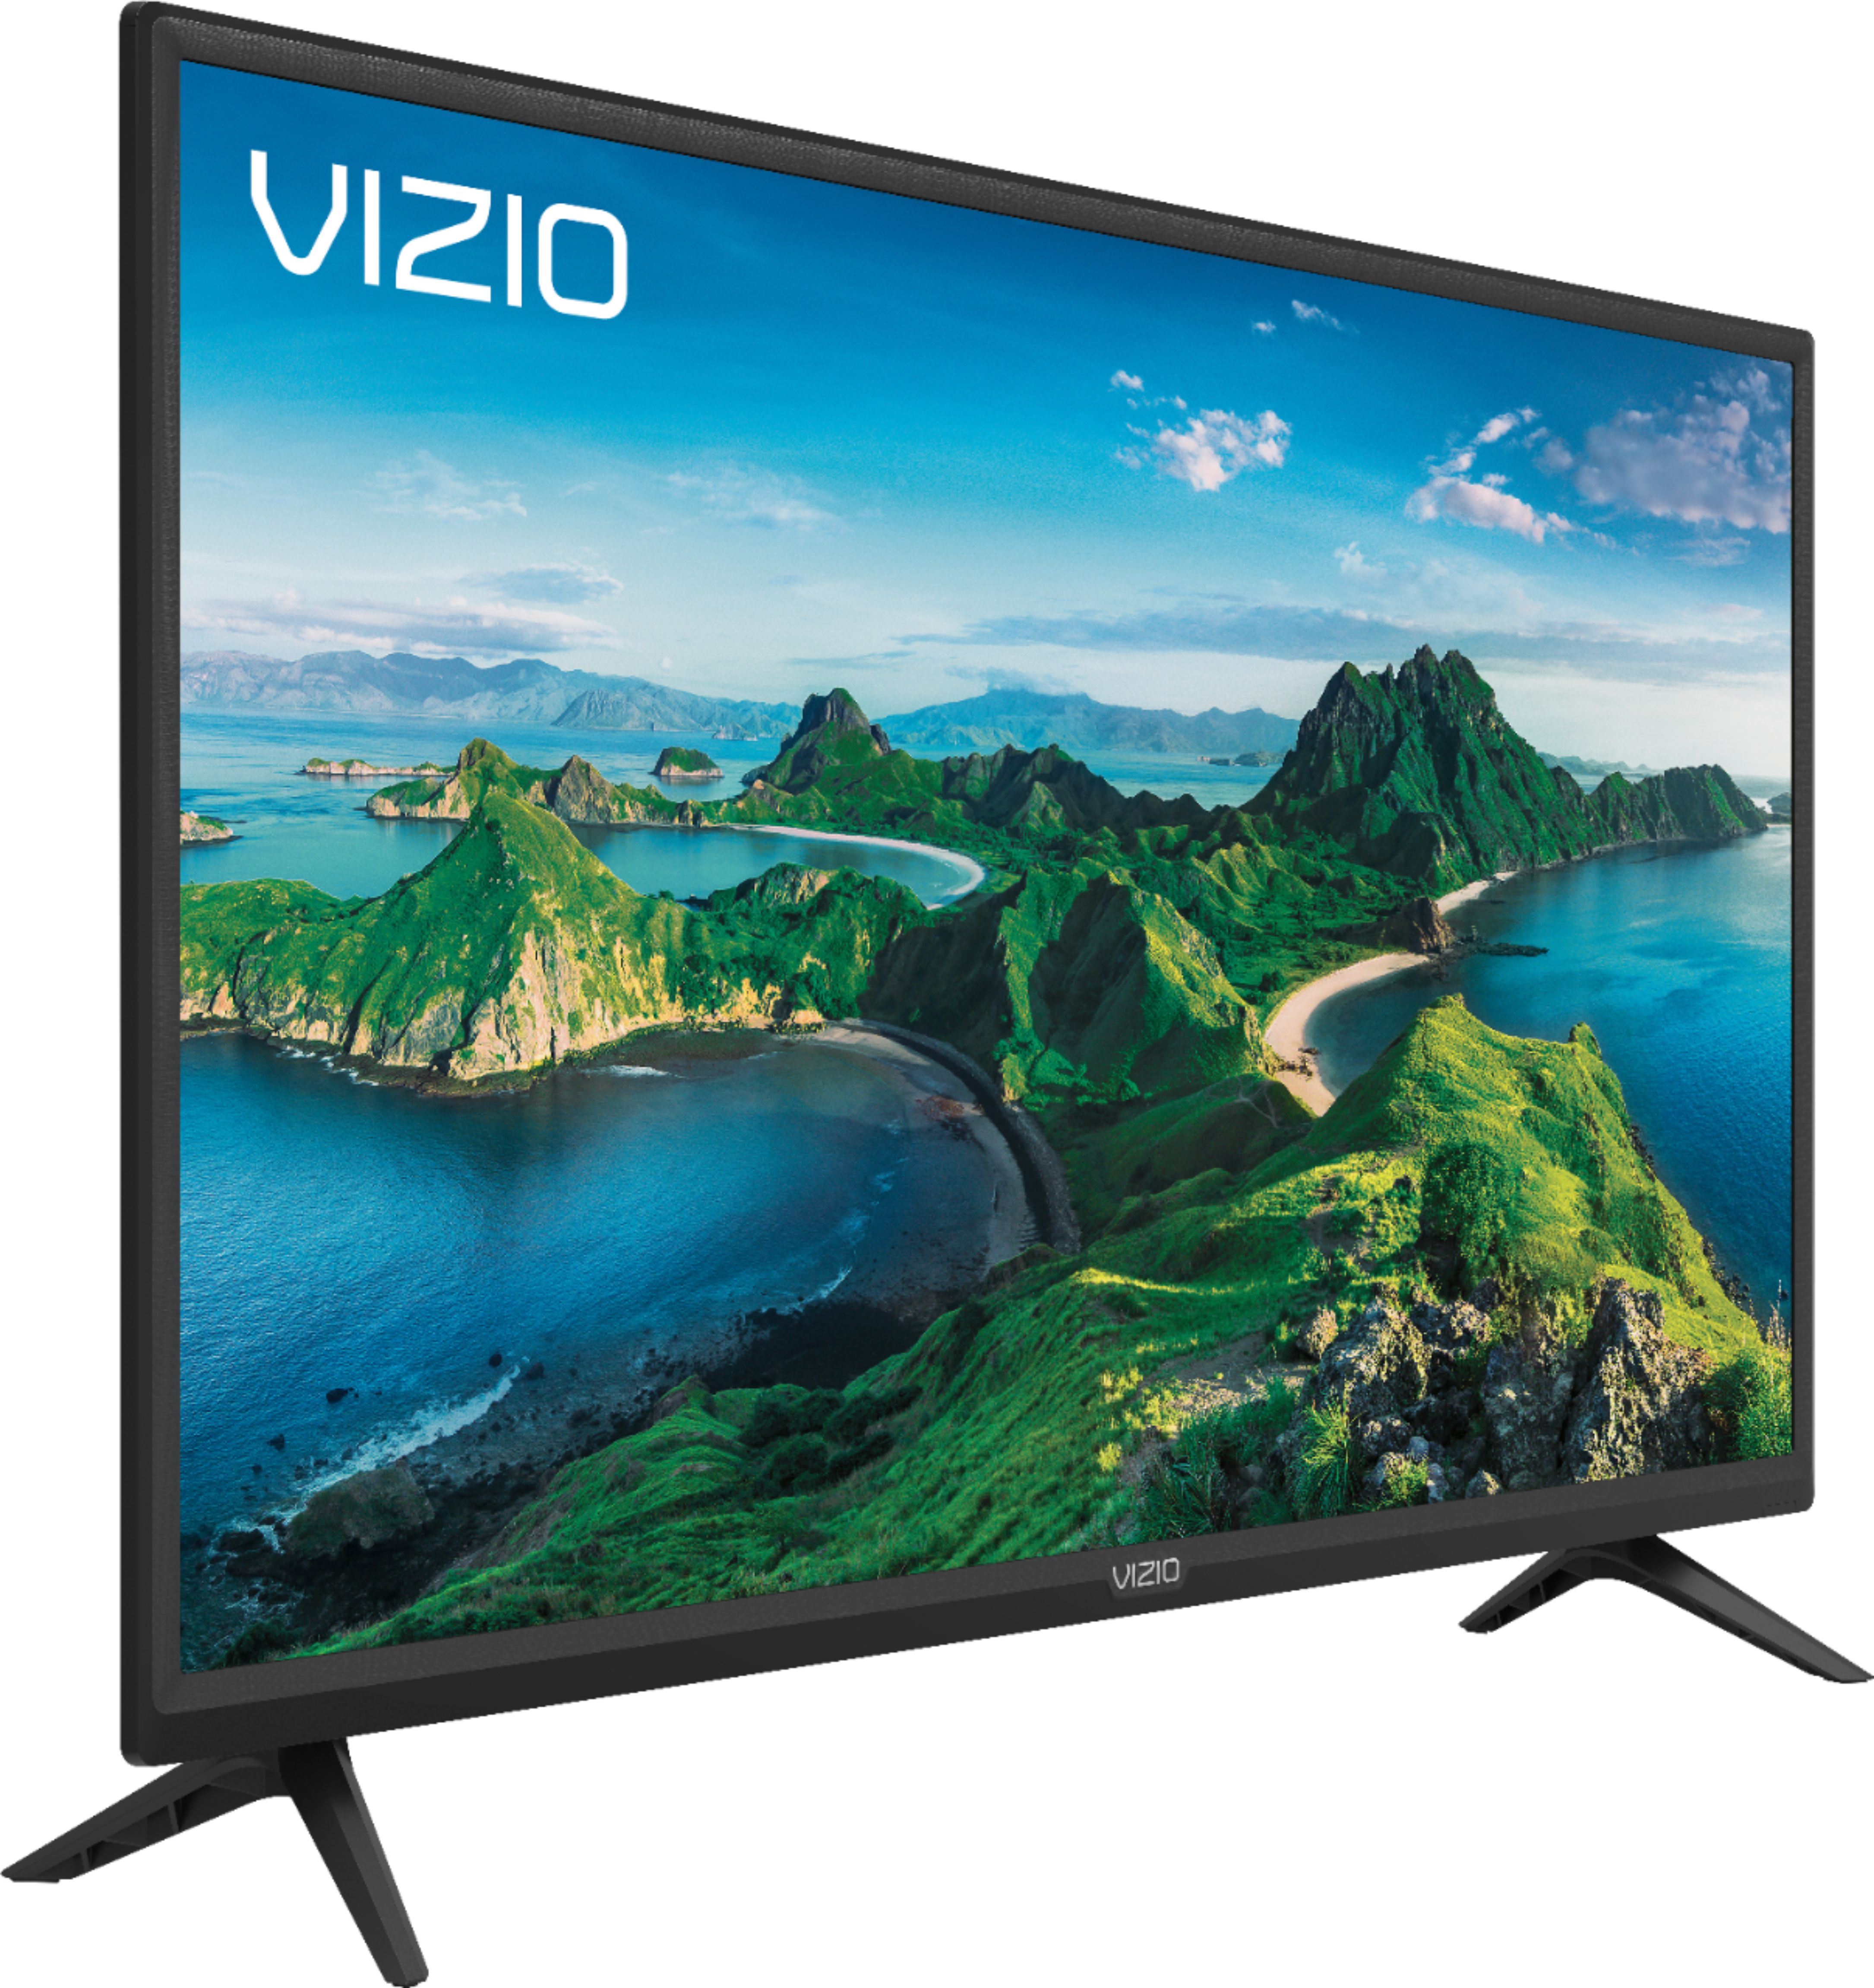 Angle View: VIZIO - 32" Class D-Series LED Full HD SmartCast TV